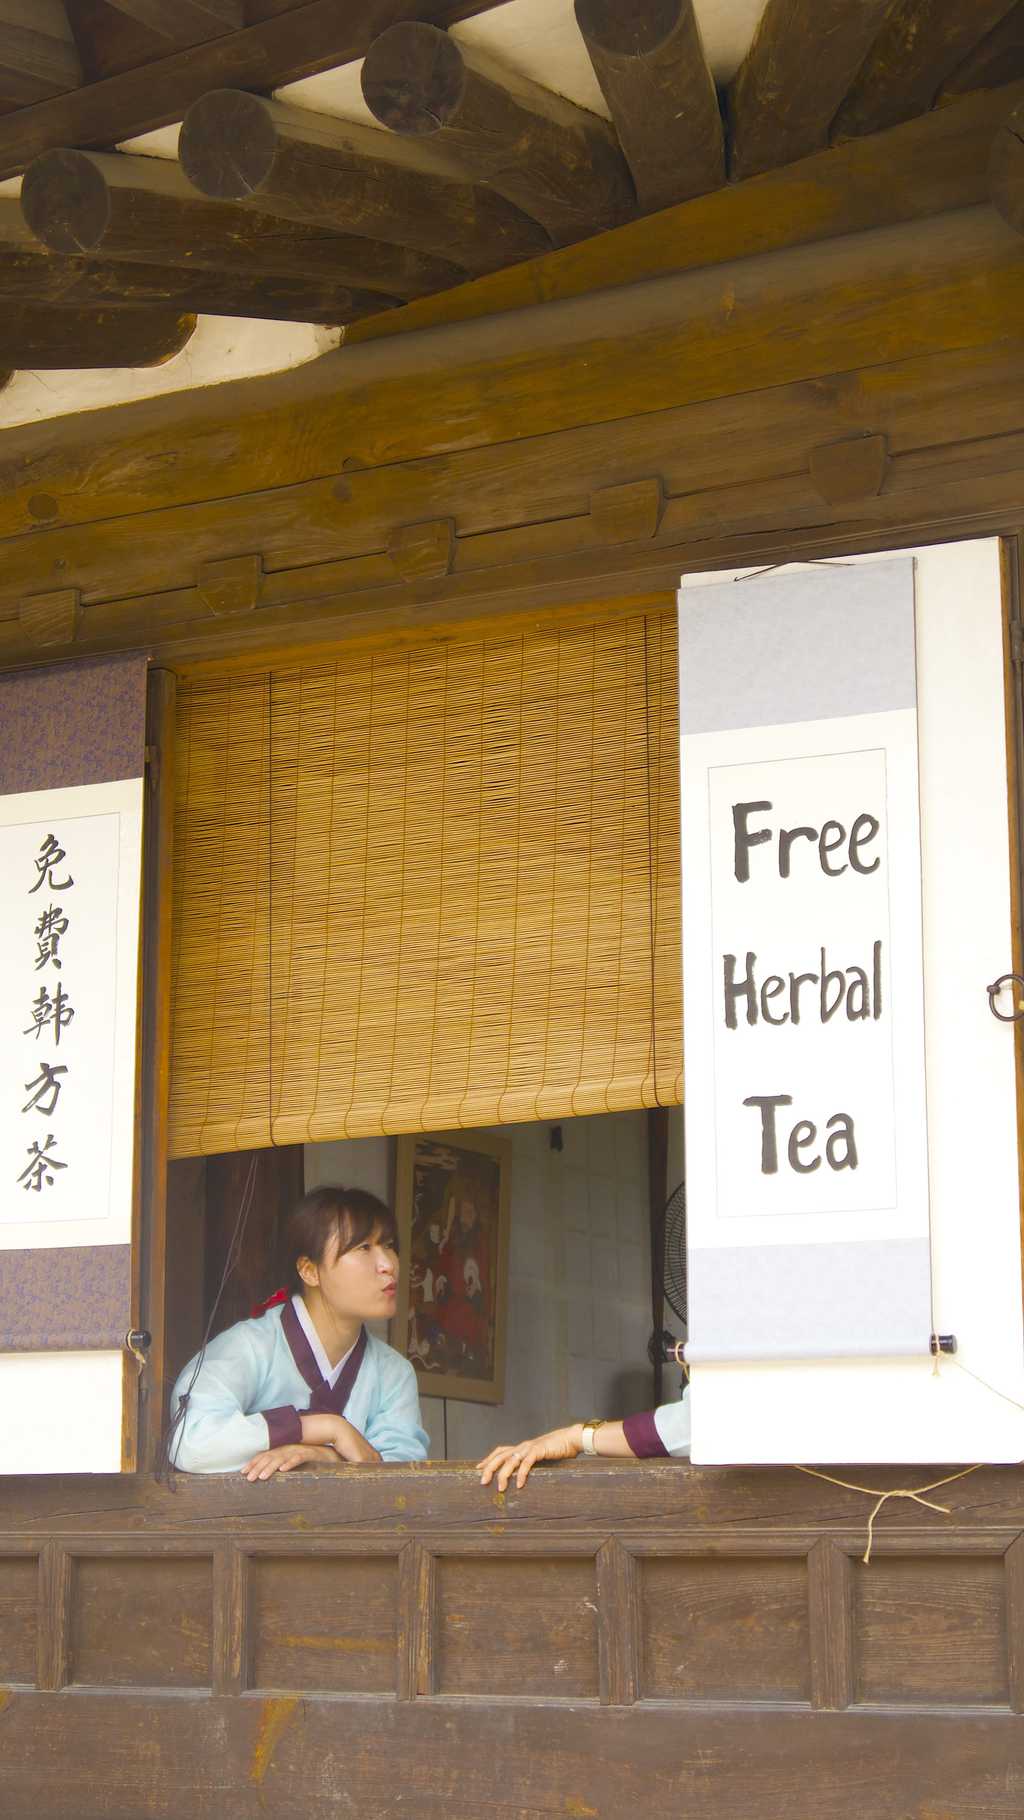 Wearing Hanbok and drinking tea in a Hanok